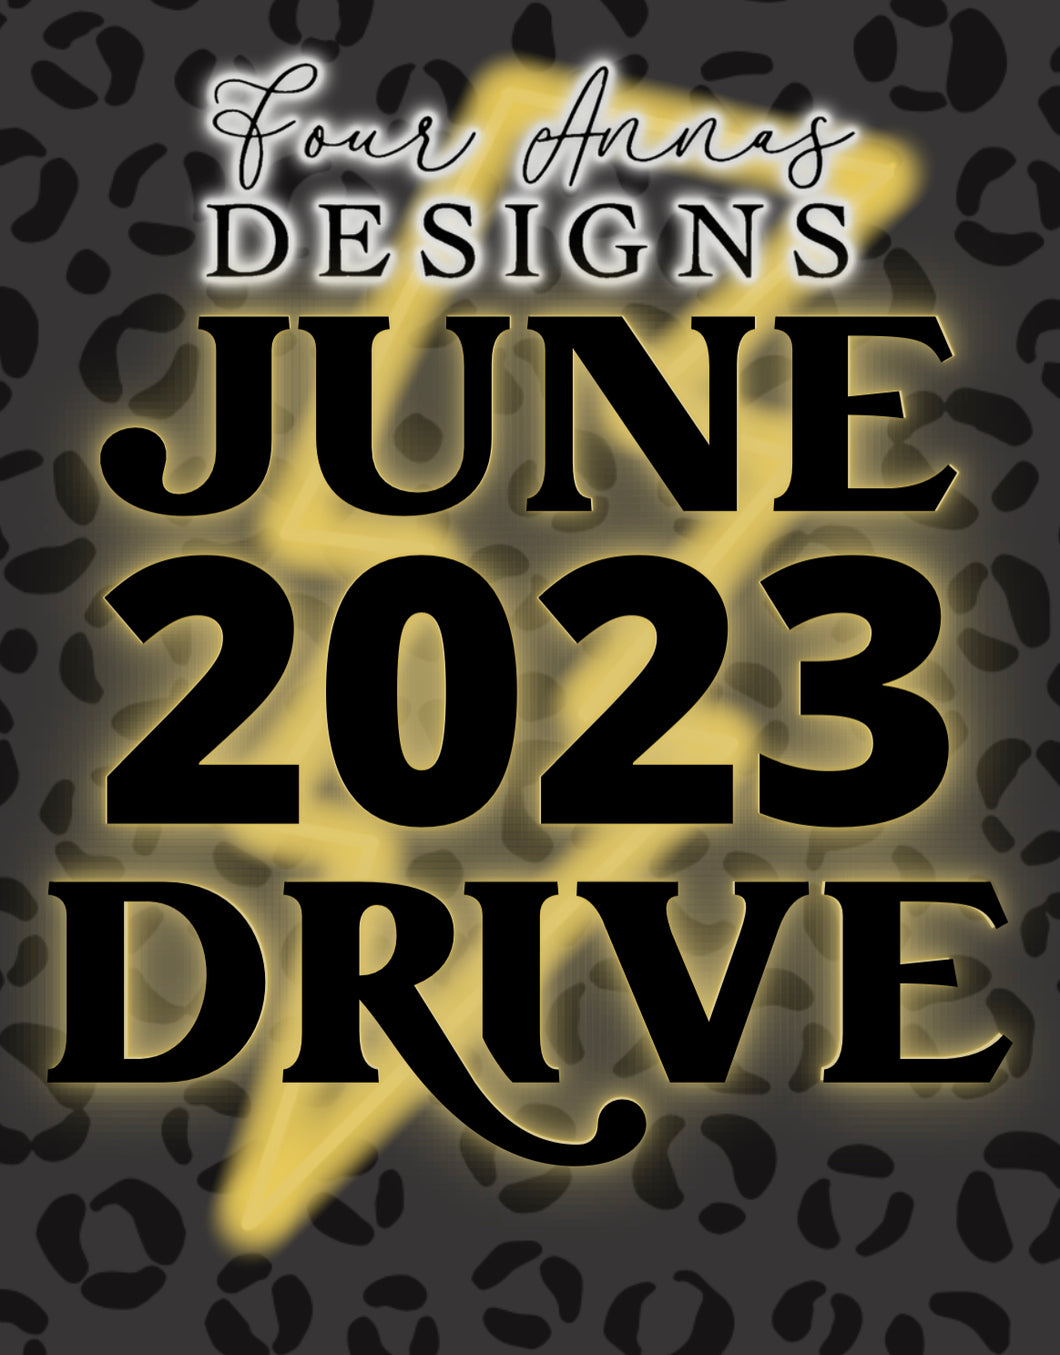 June 2023 Drive